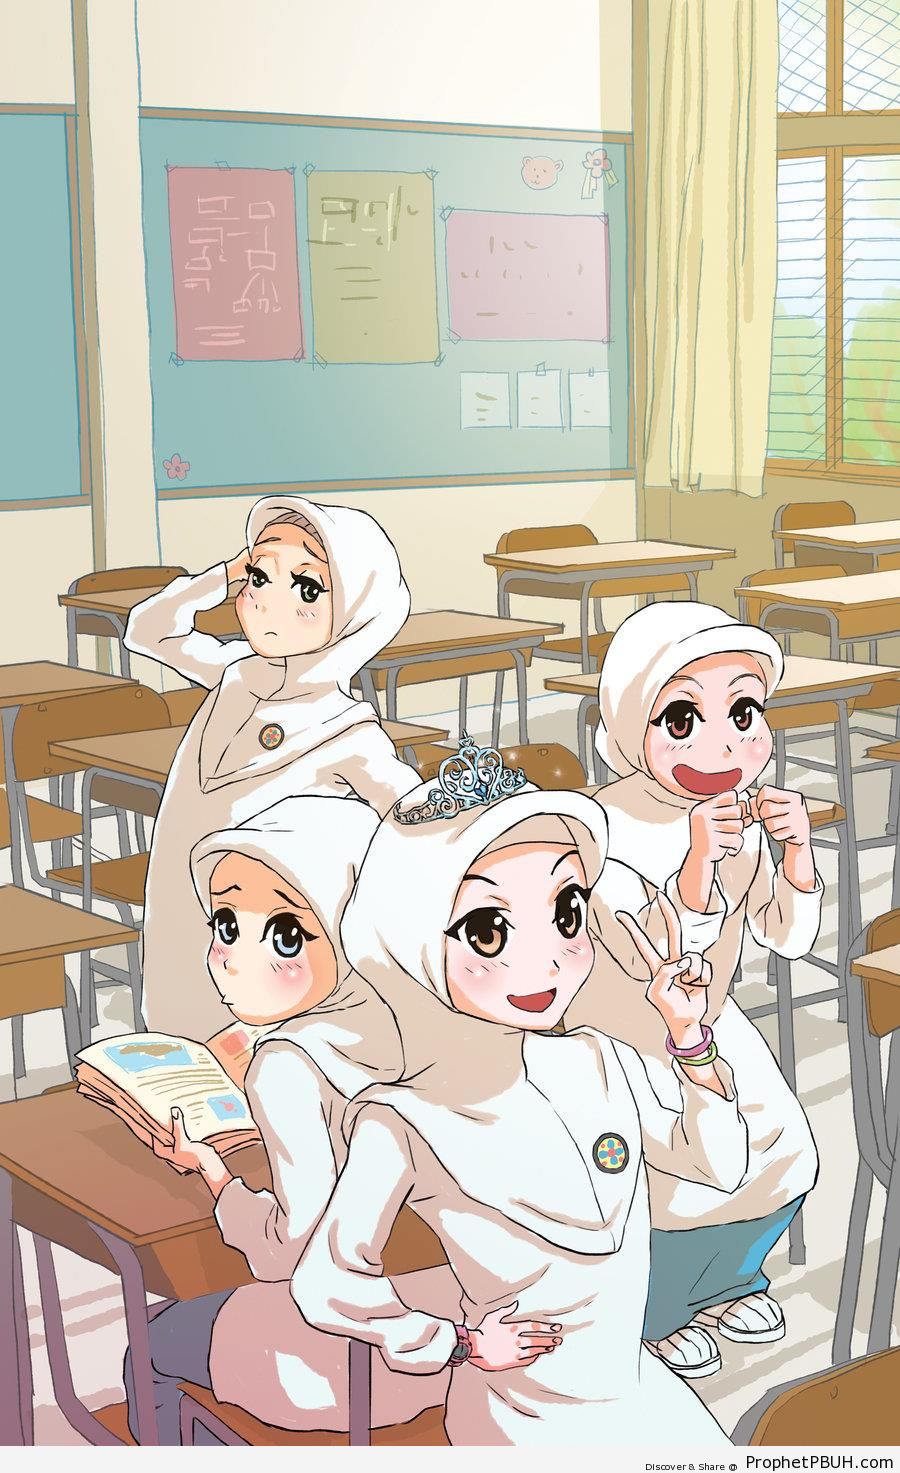 Muslim Girl Students in Classroom (Anime & Manga Style Drawing) - Drawings 